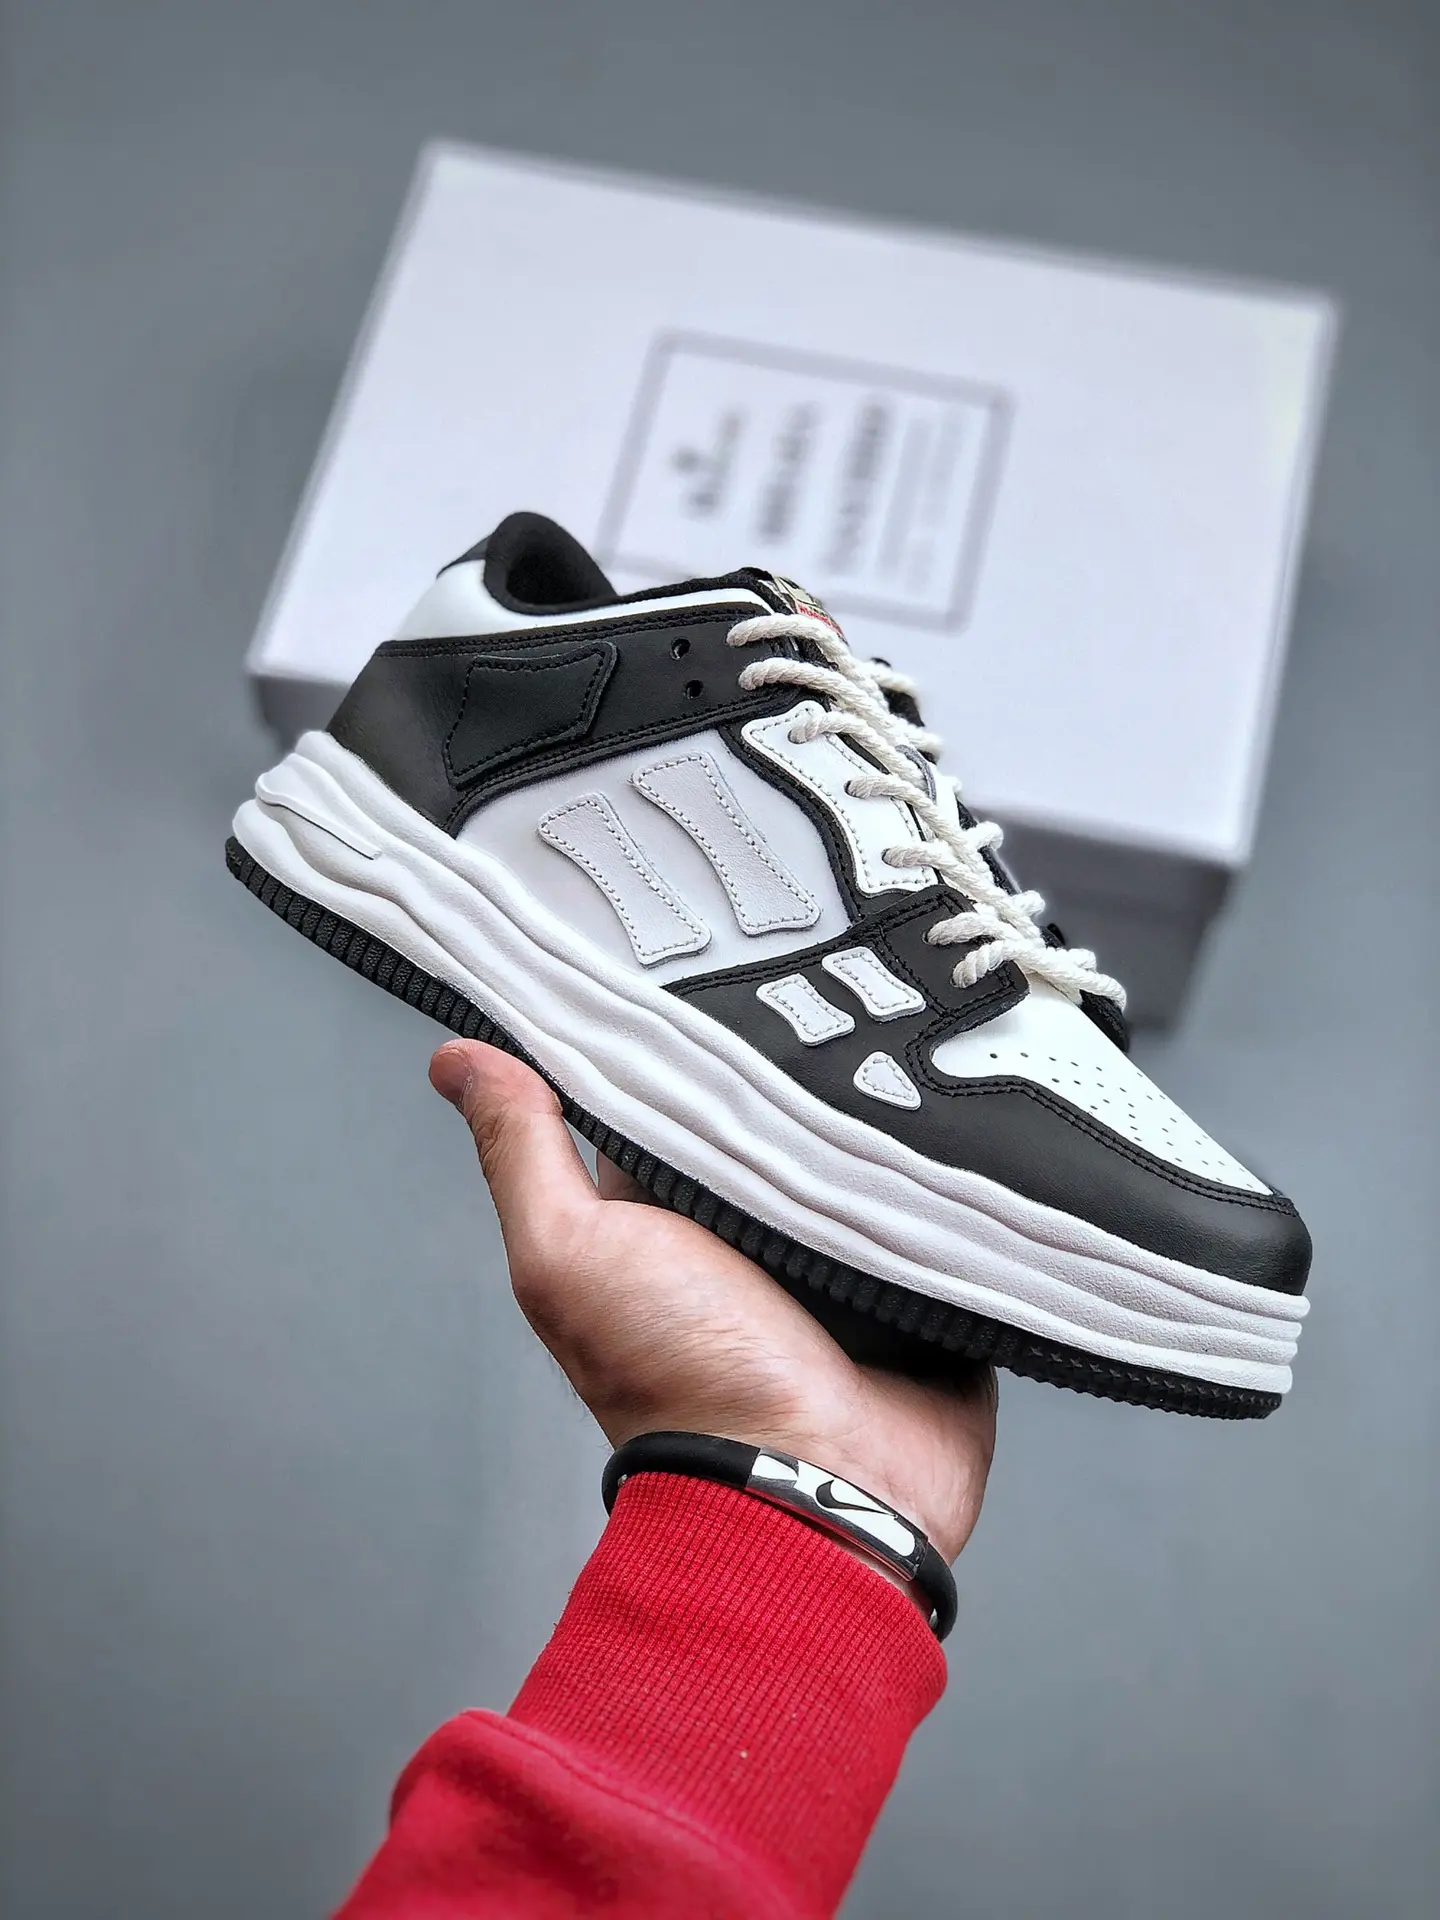 MMY Maison MIHARA YASUHIRO Wayne Original Sole Leather Low Black/White Sneaker Review | YtaYta